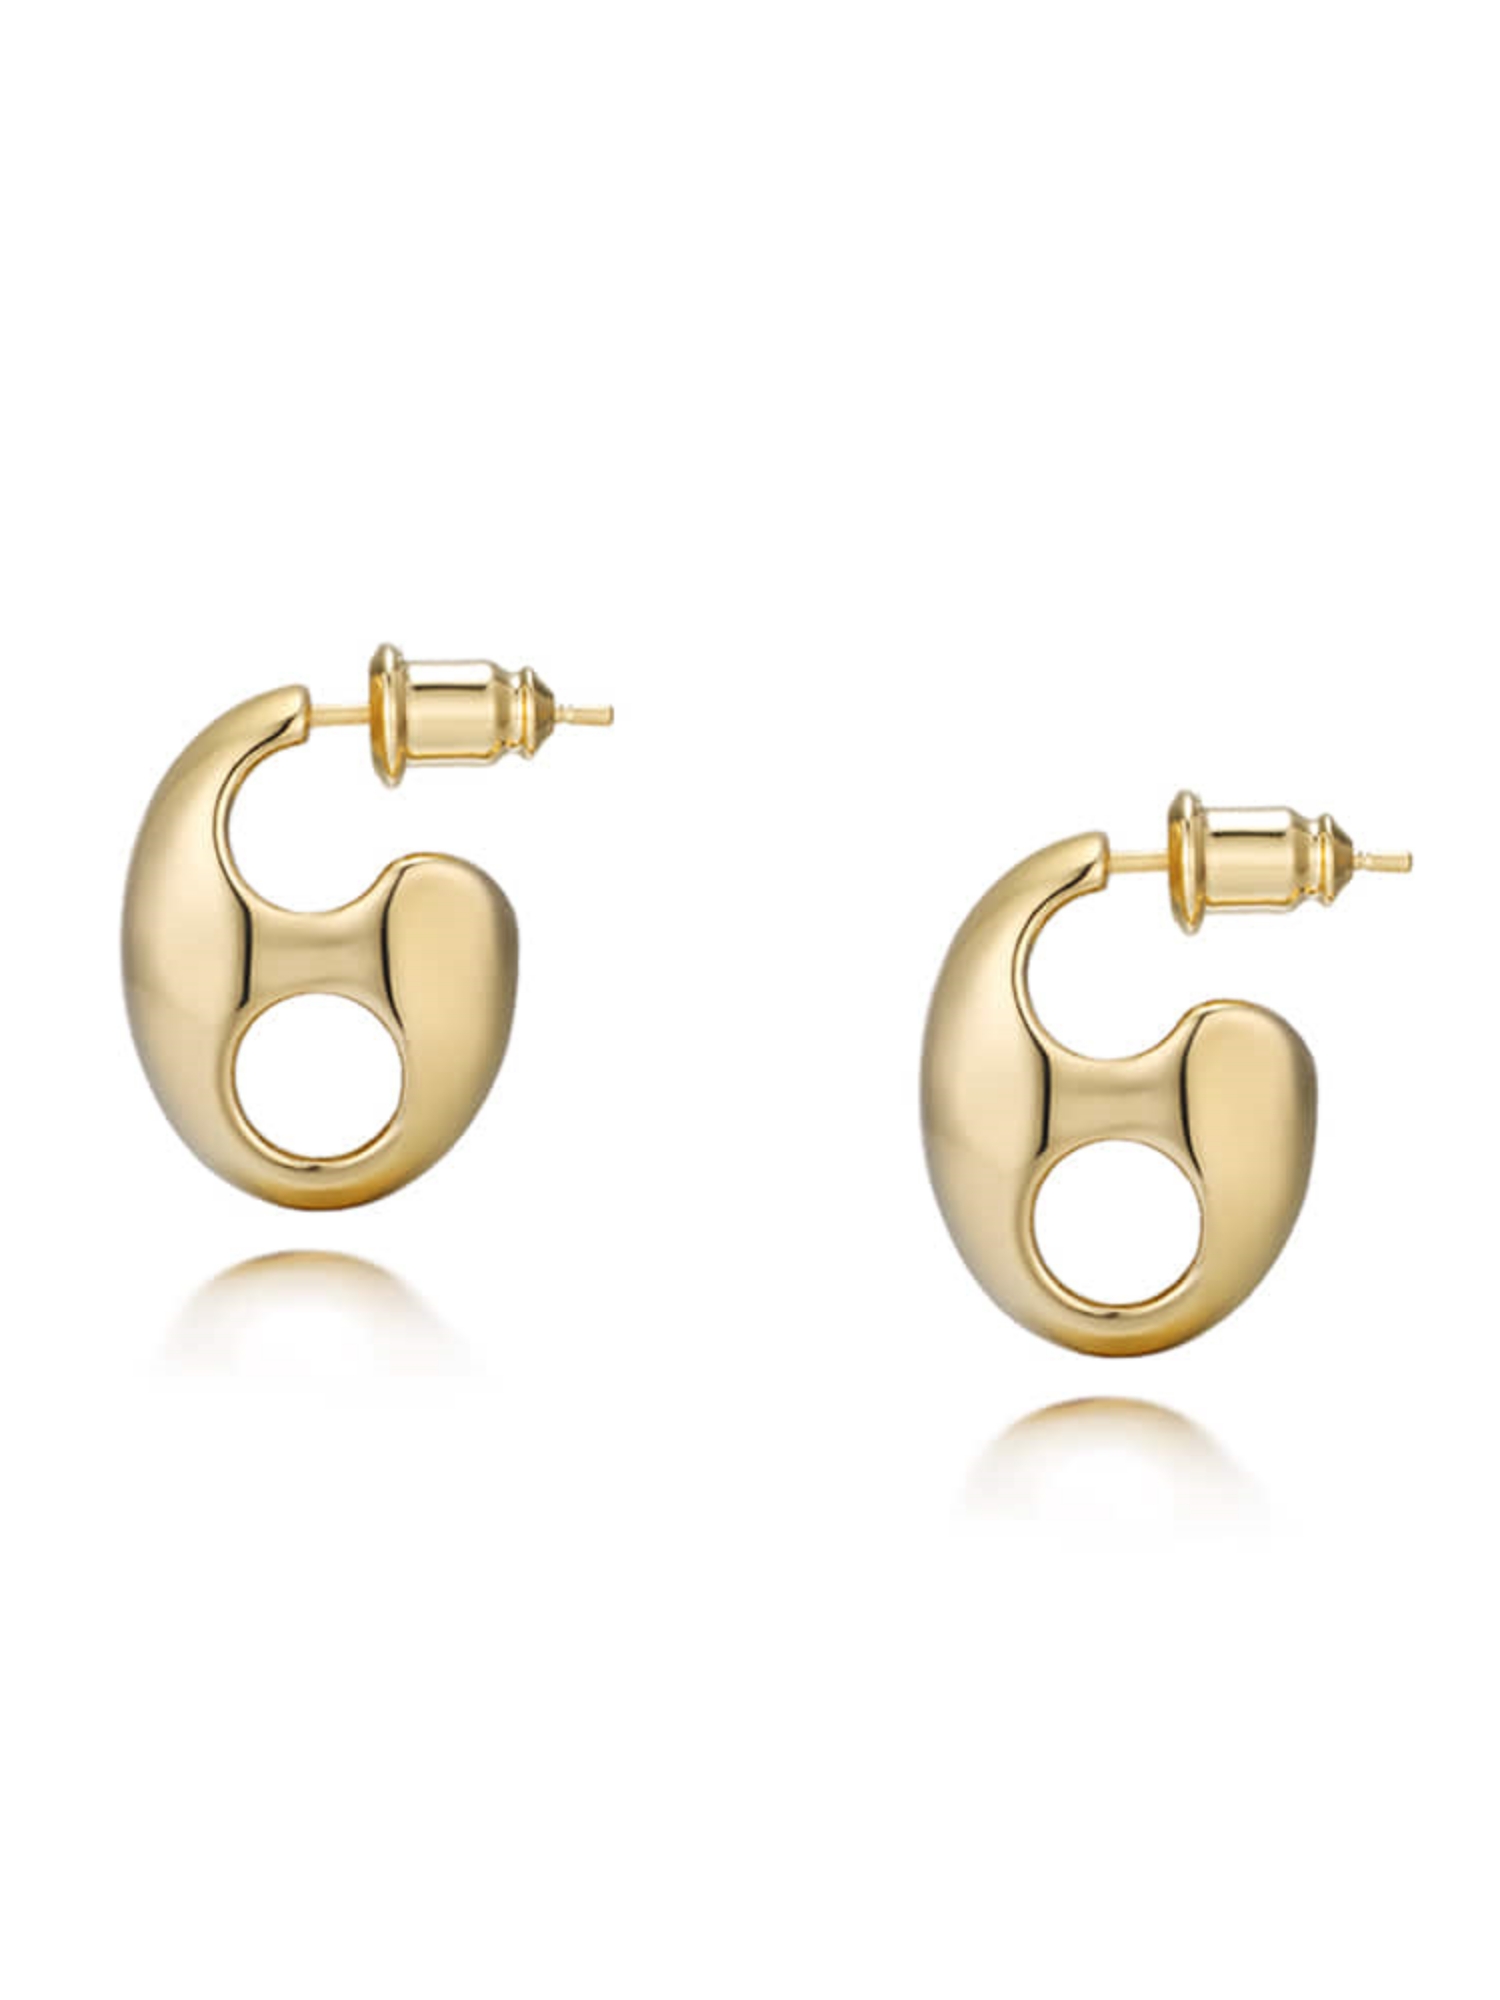 MOUMOU Earrings Gold